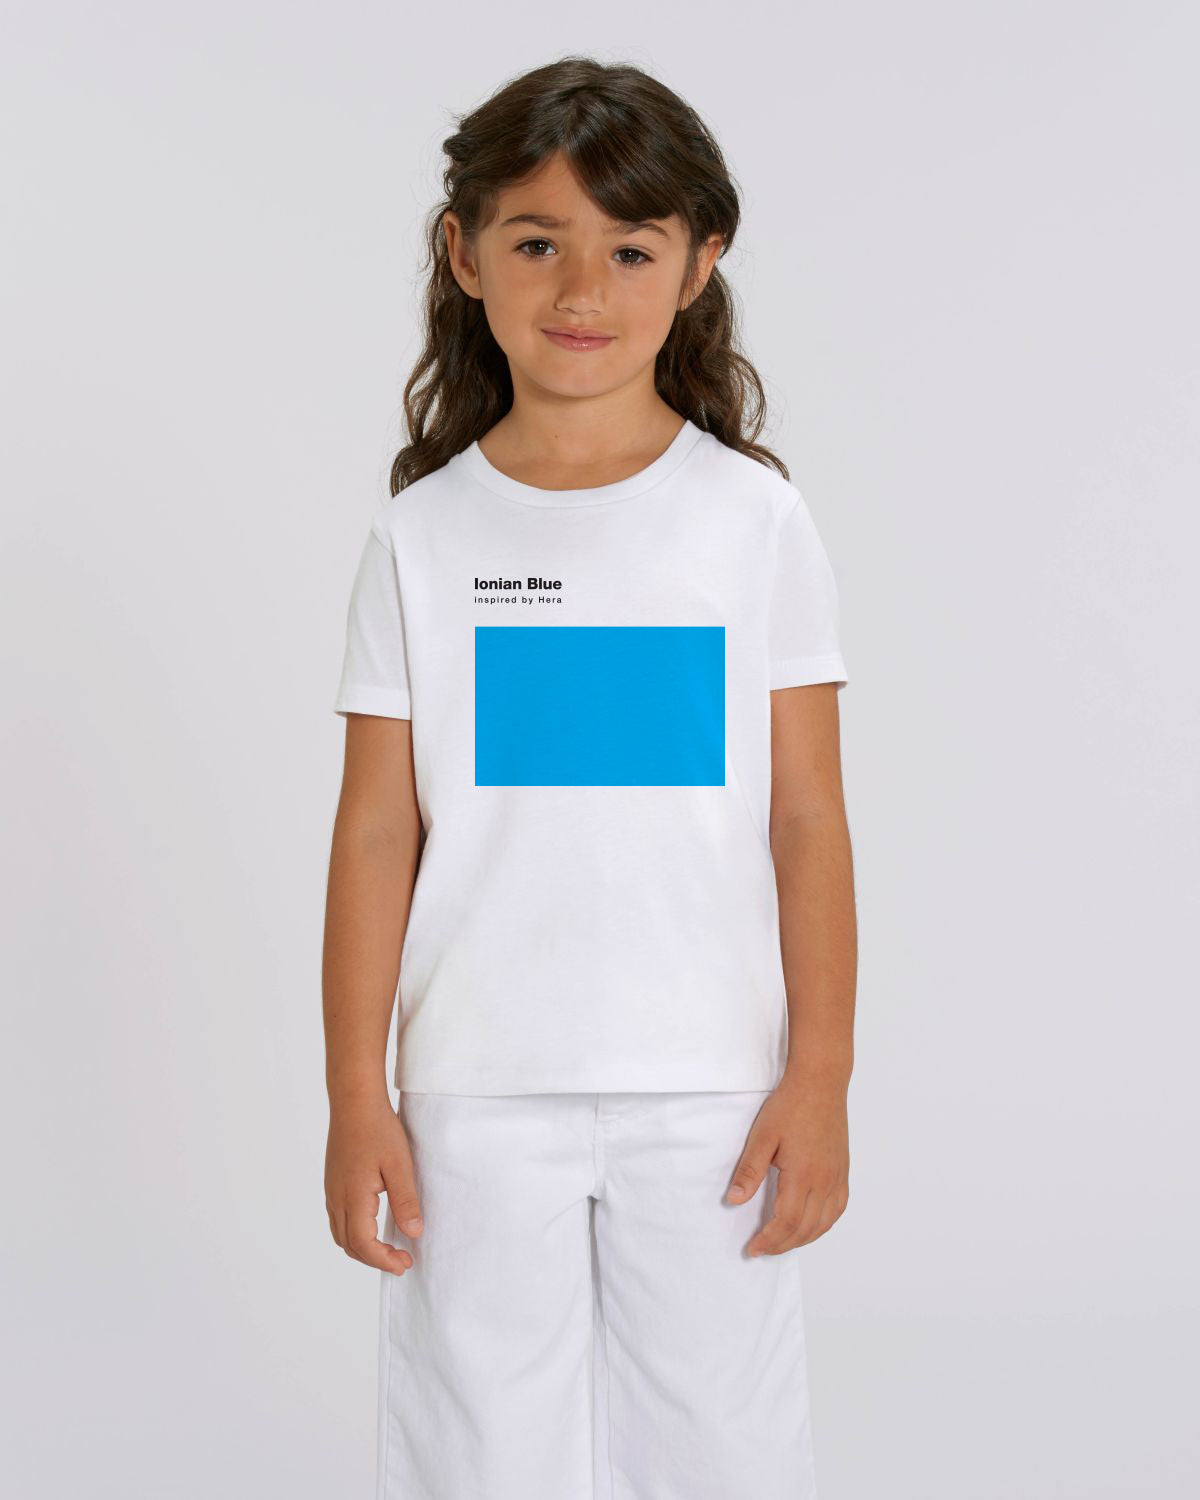 Ionian Blue kids t shirt